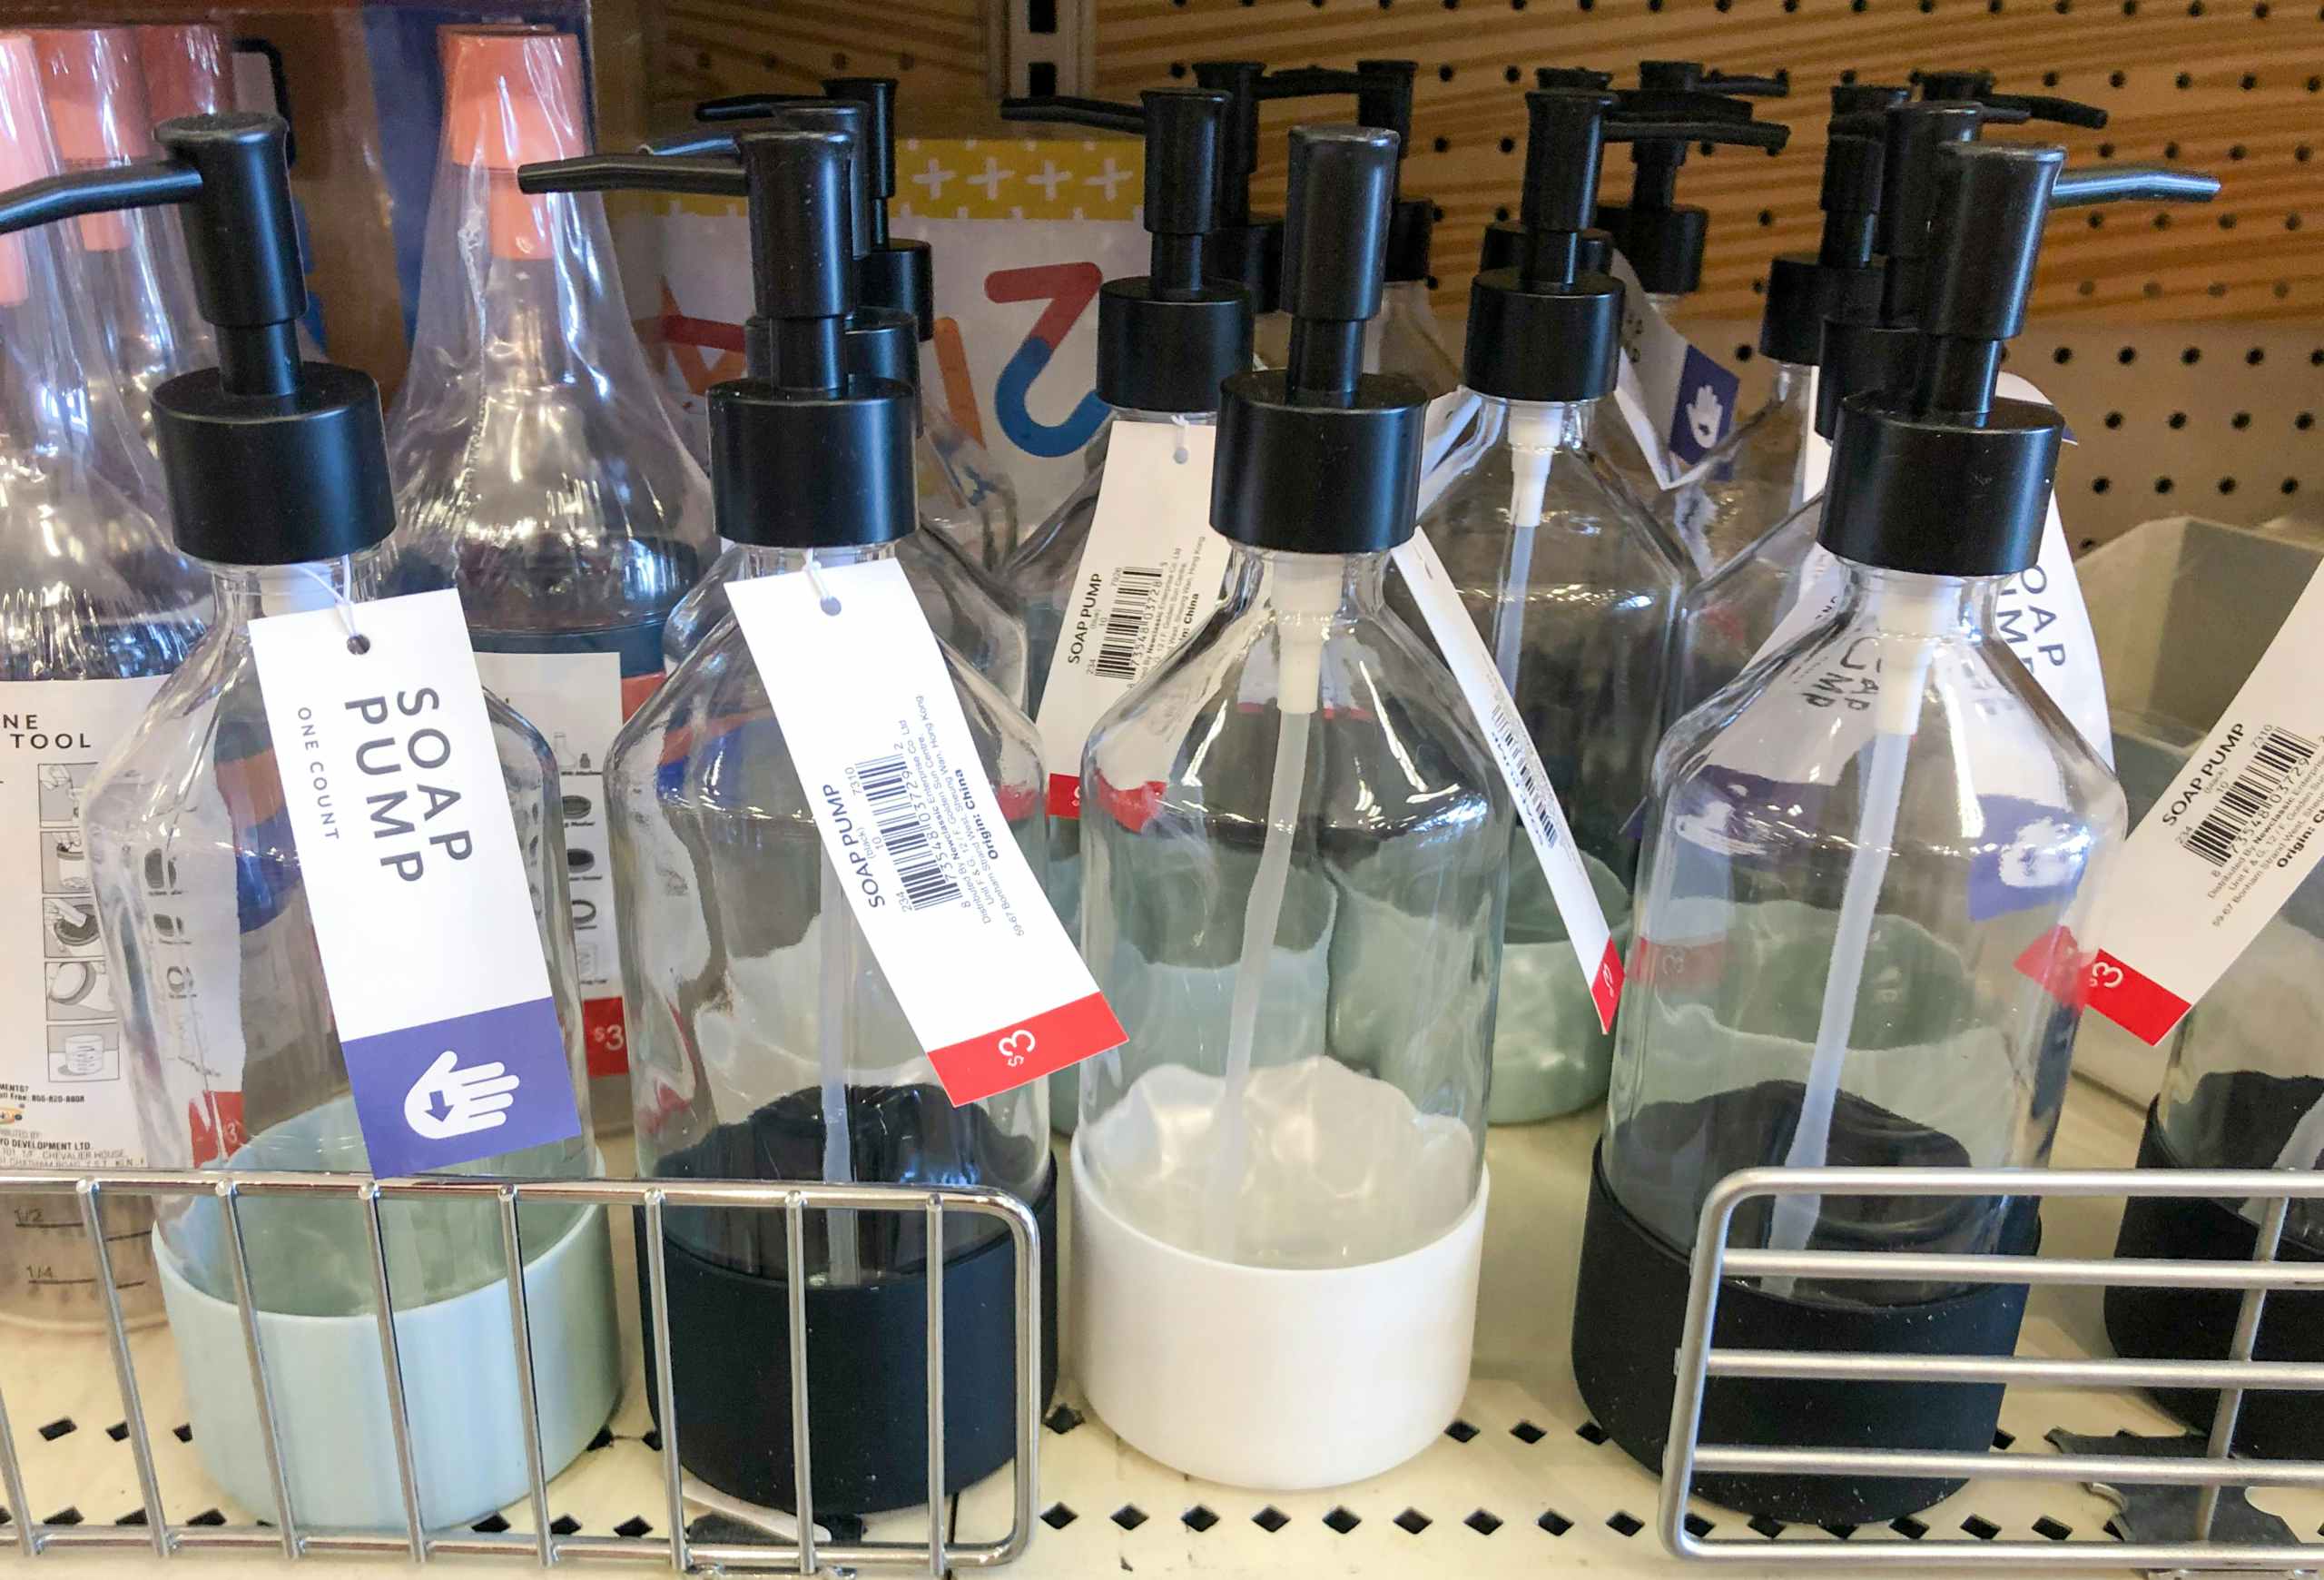 glass soap bottles on store shelf at Target